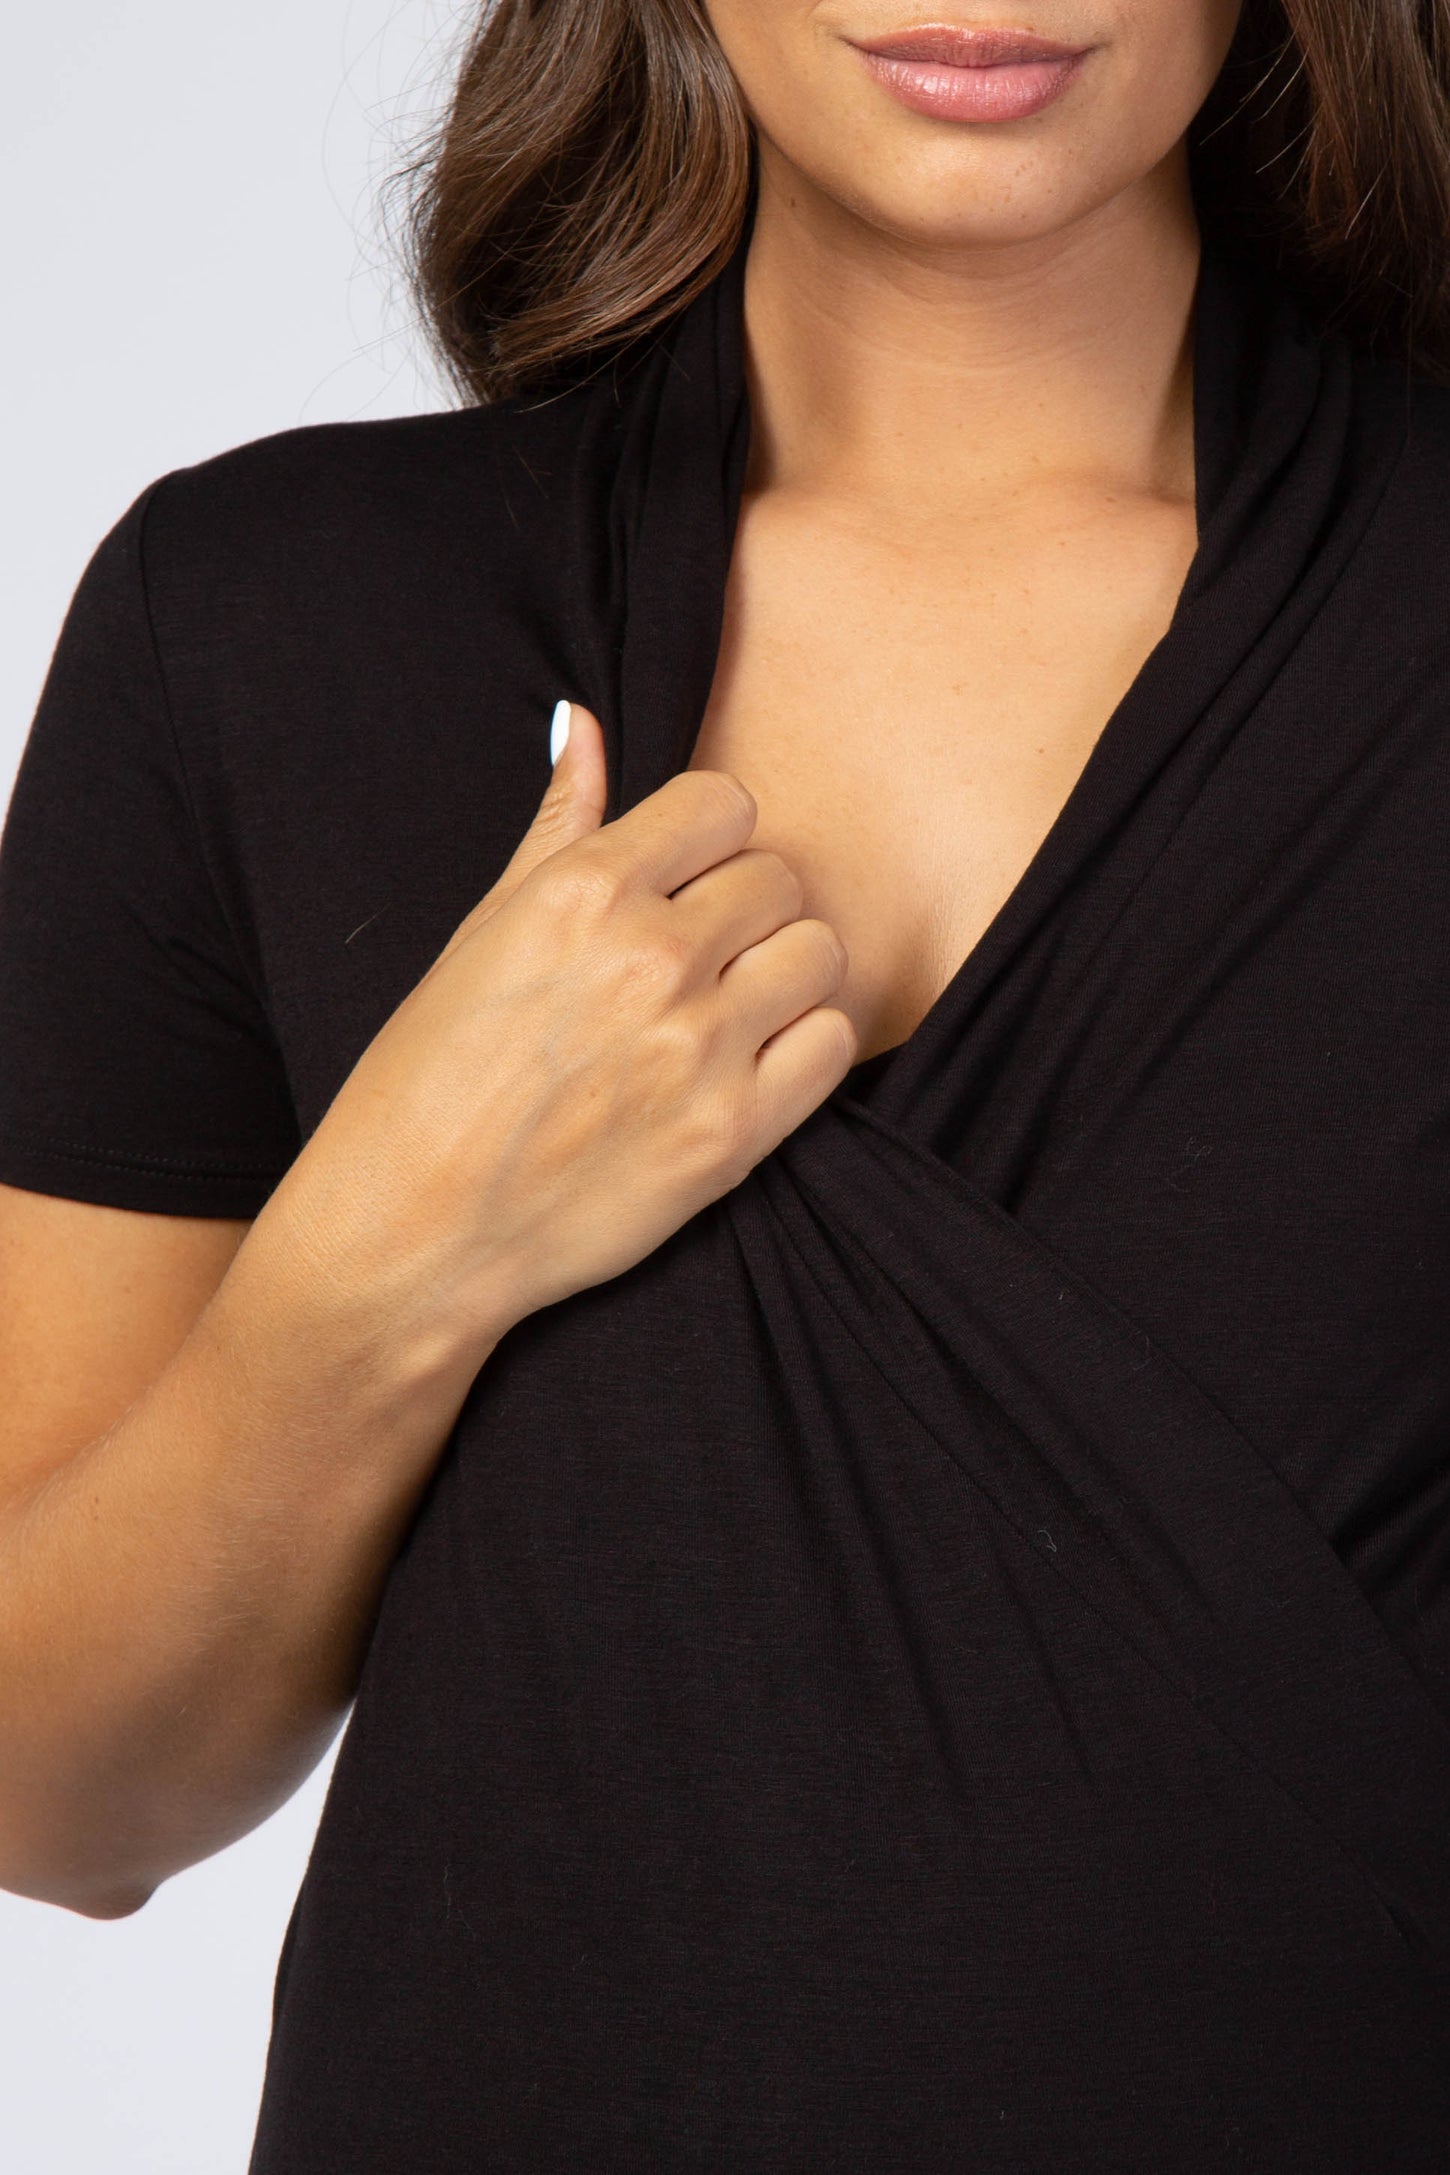 Black Solid Short Sleeve Wrap Front Maternity/Nursing Top